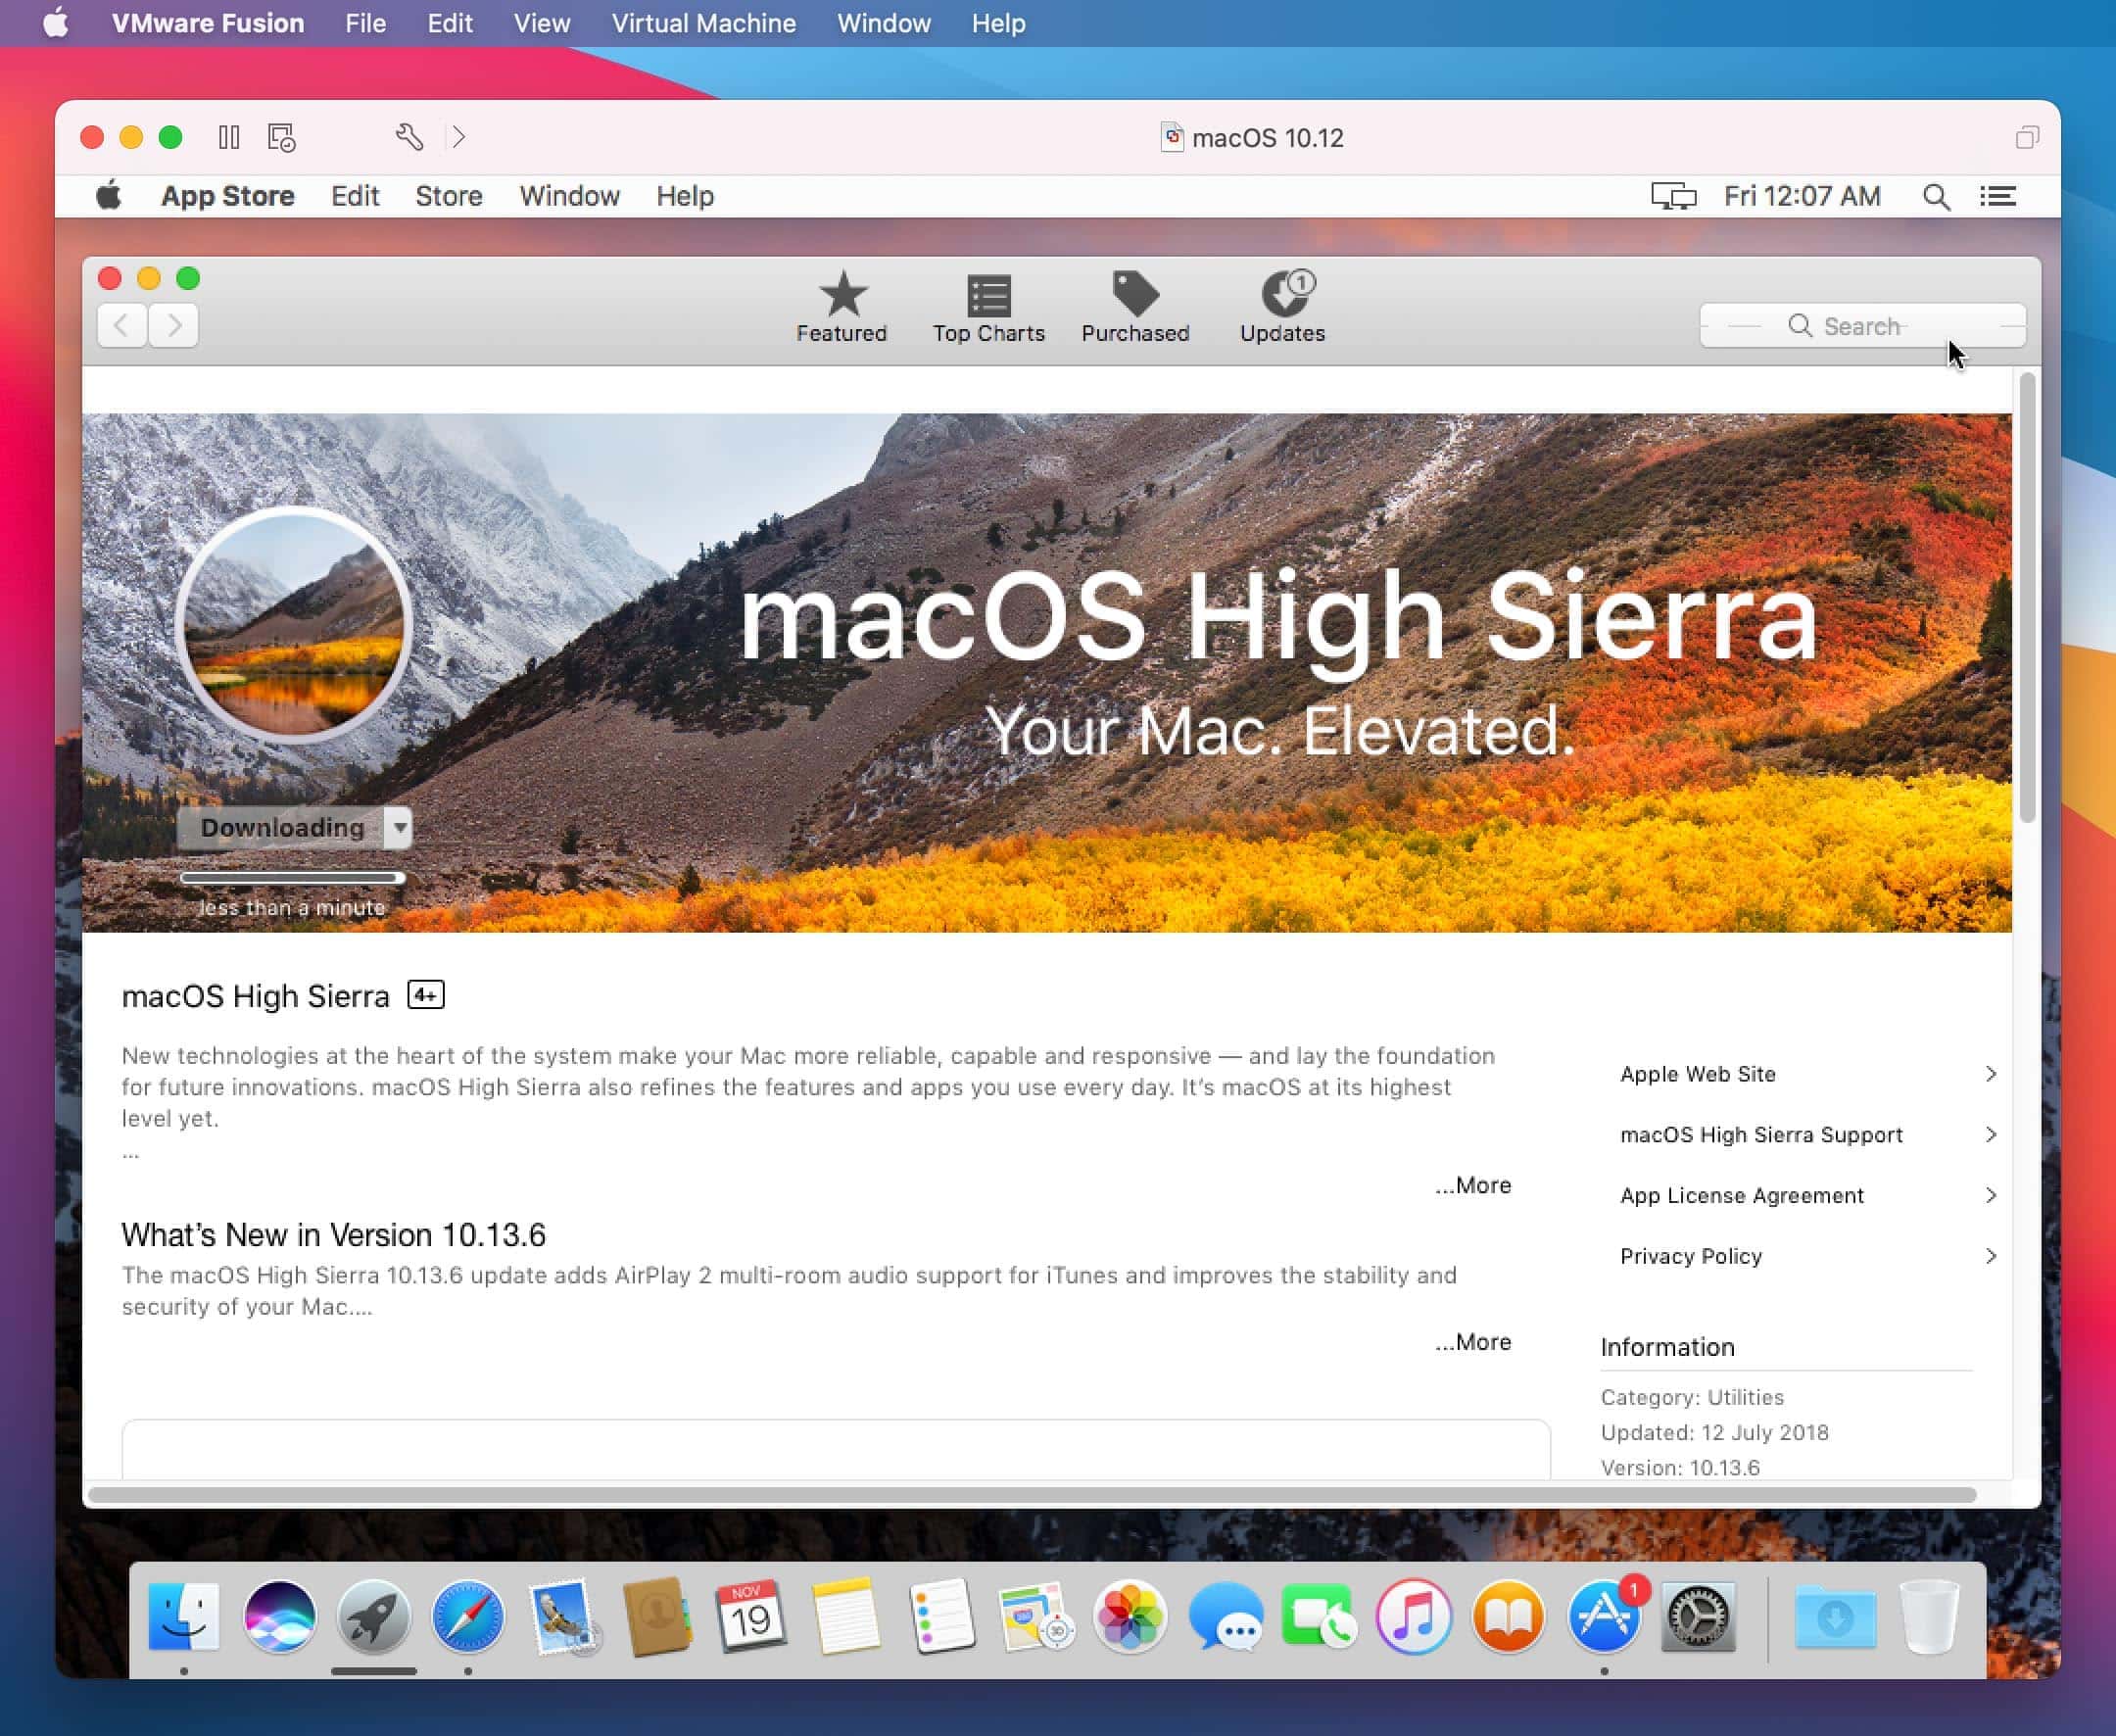 macos high sierra download page.